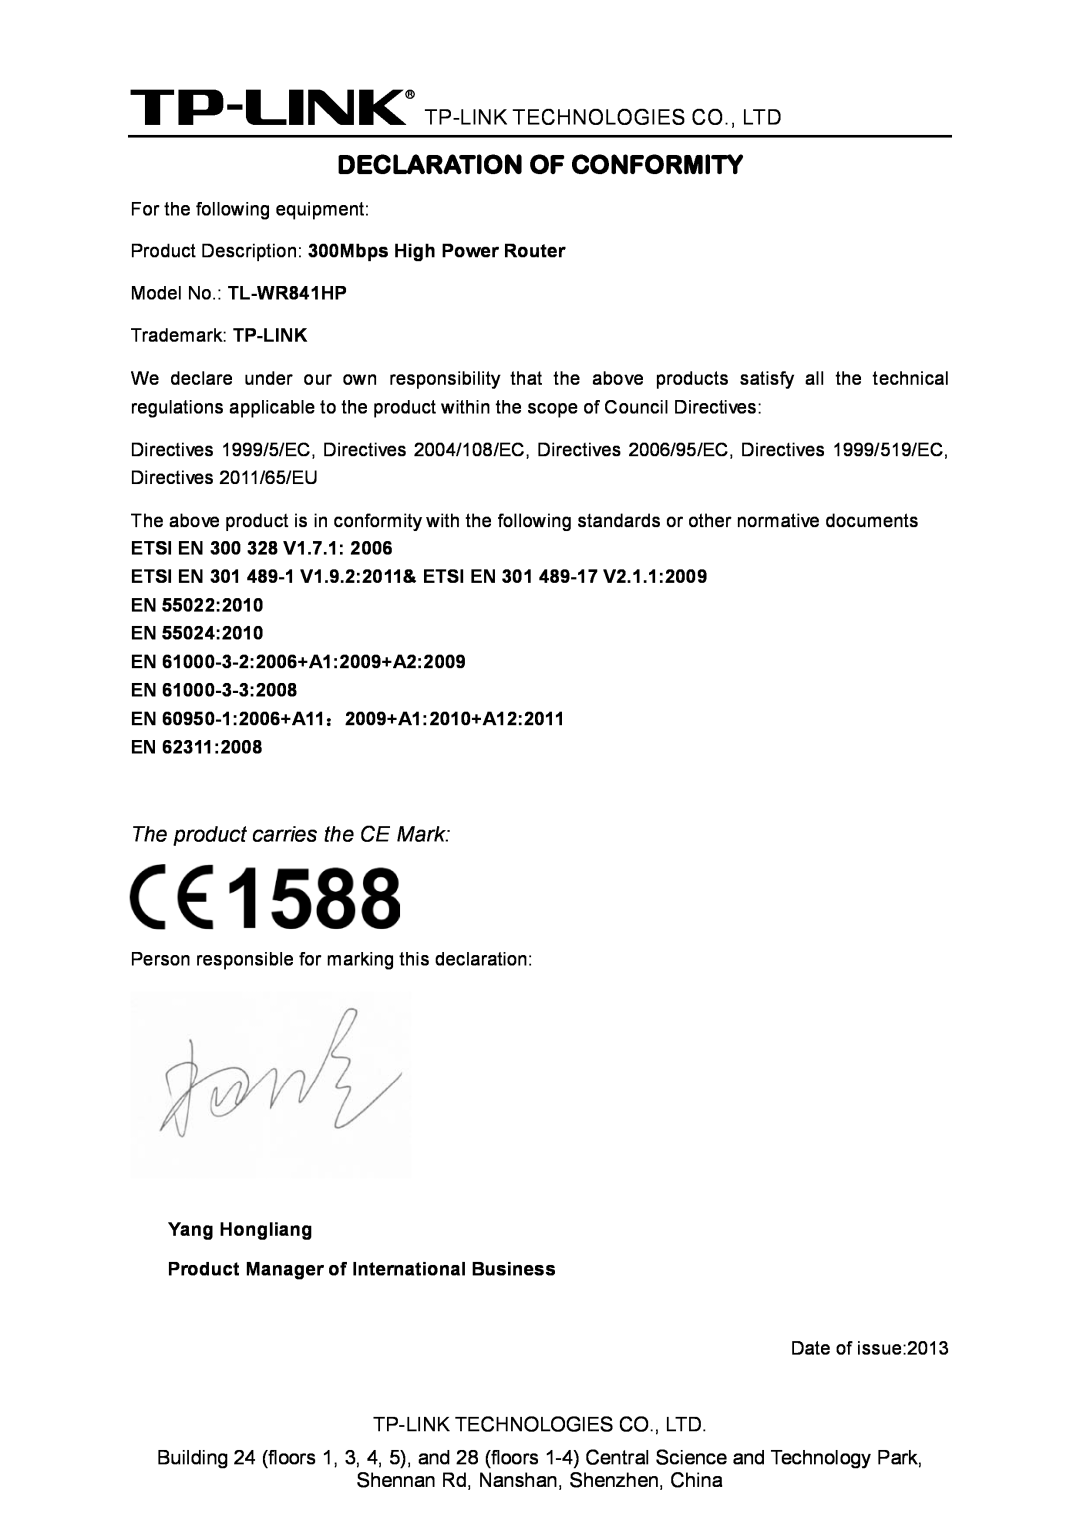 TP-Link Rev 1.0.0 1910010810 manual Declaration Of Conformity, Product Description 300Mbps High Power Router 